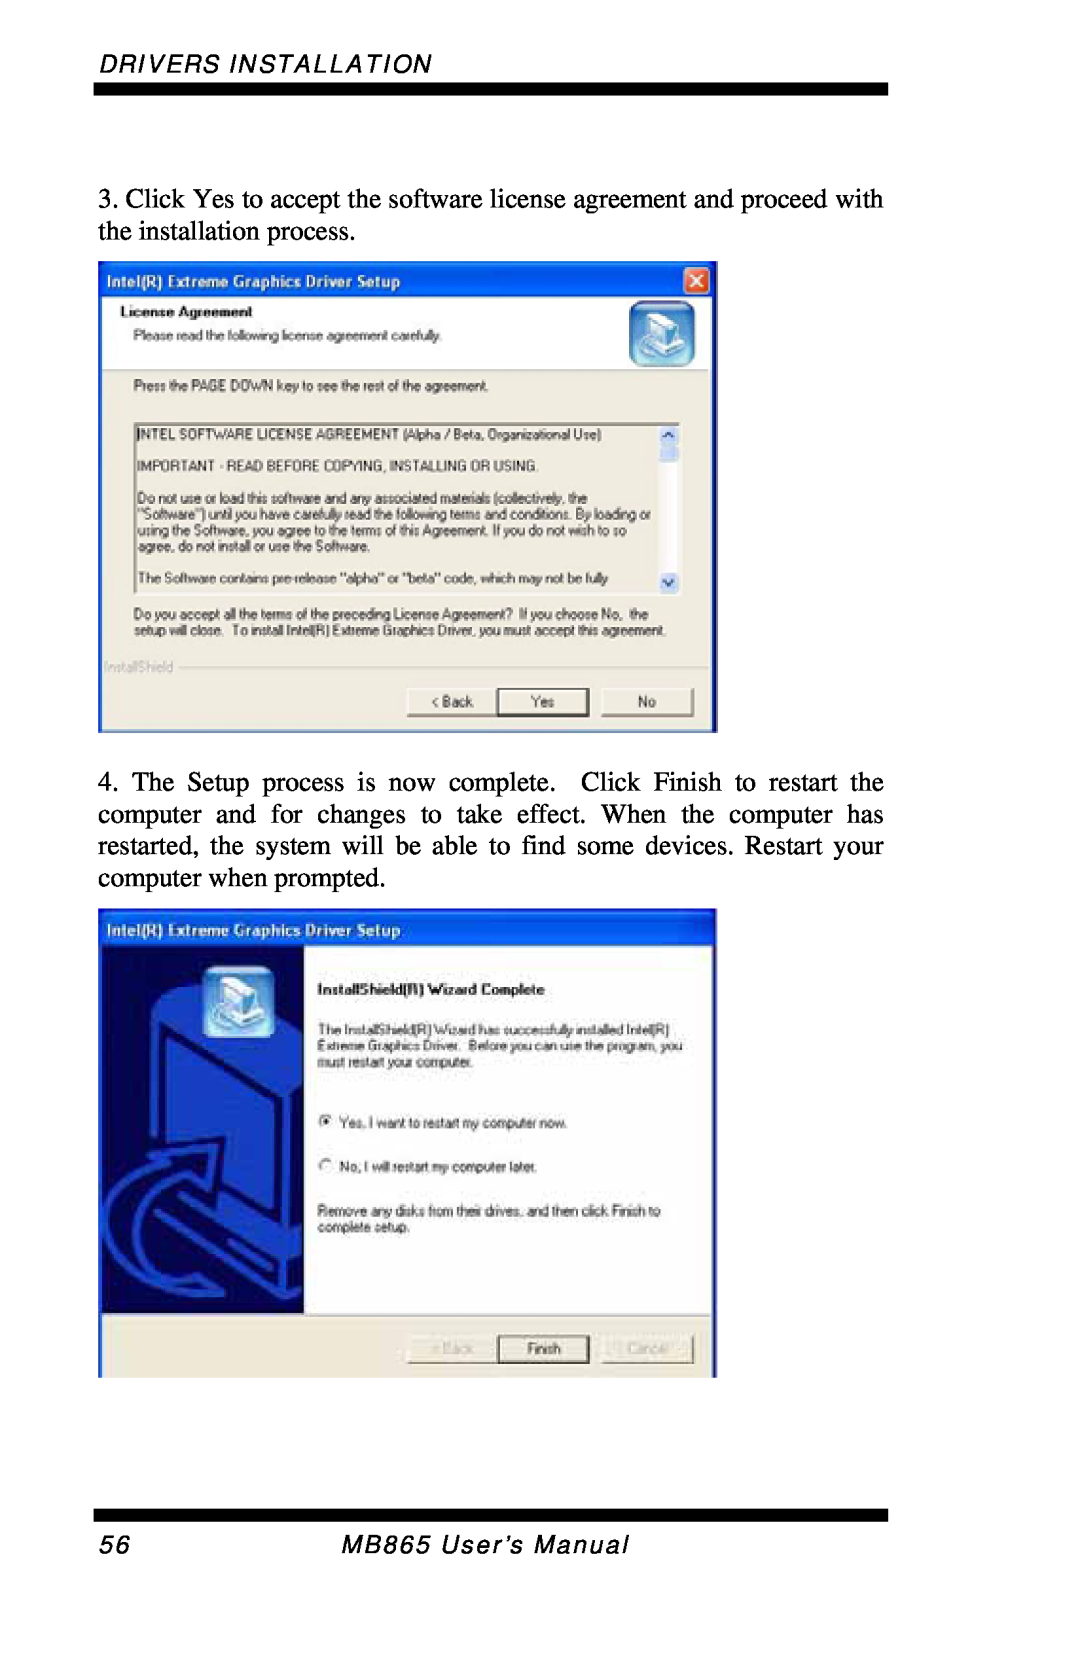 Intel MB865 user manual Drivers Installation 